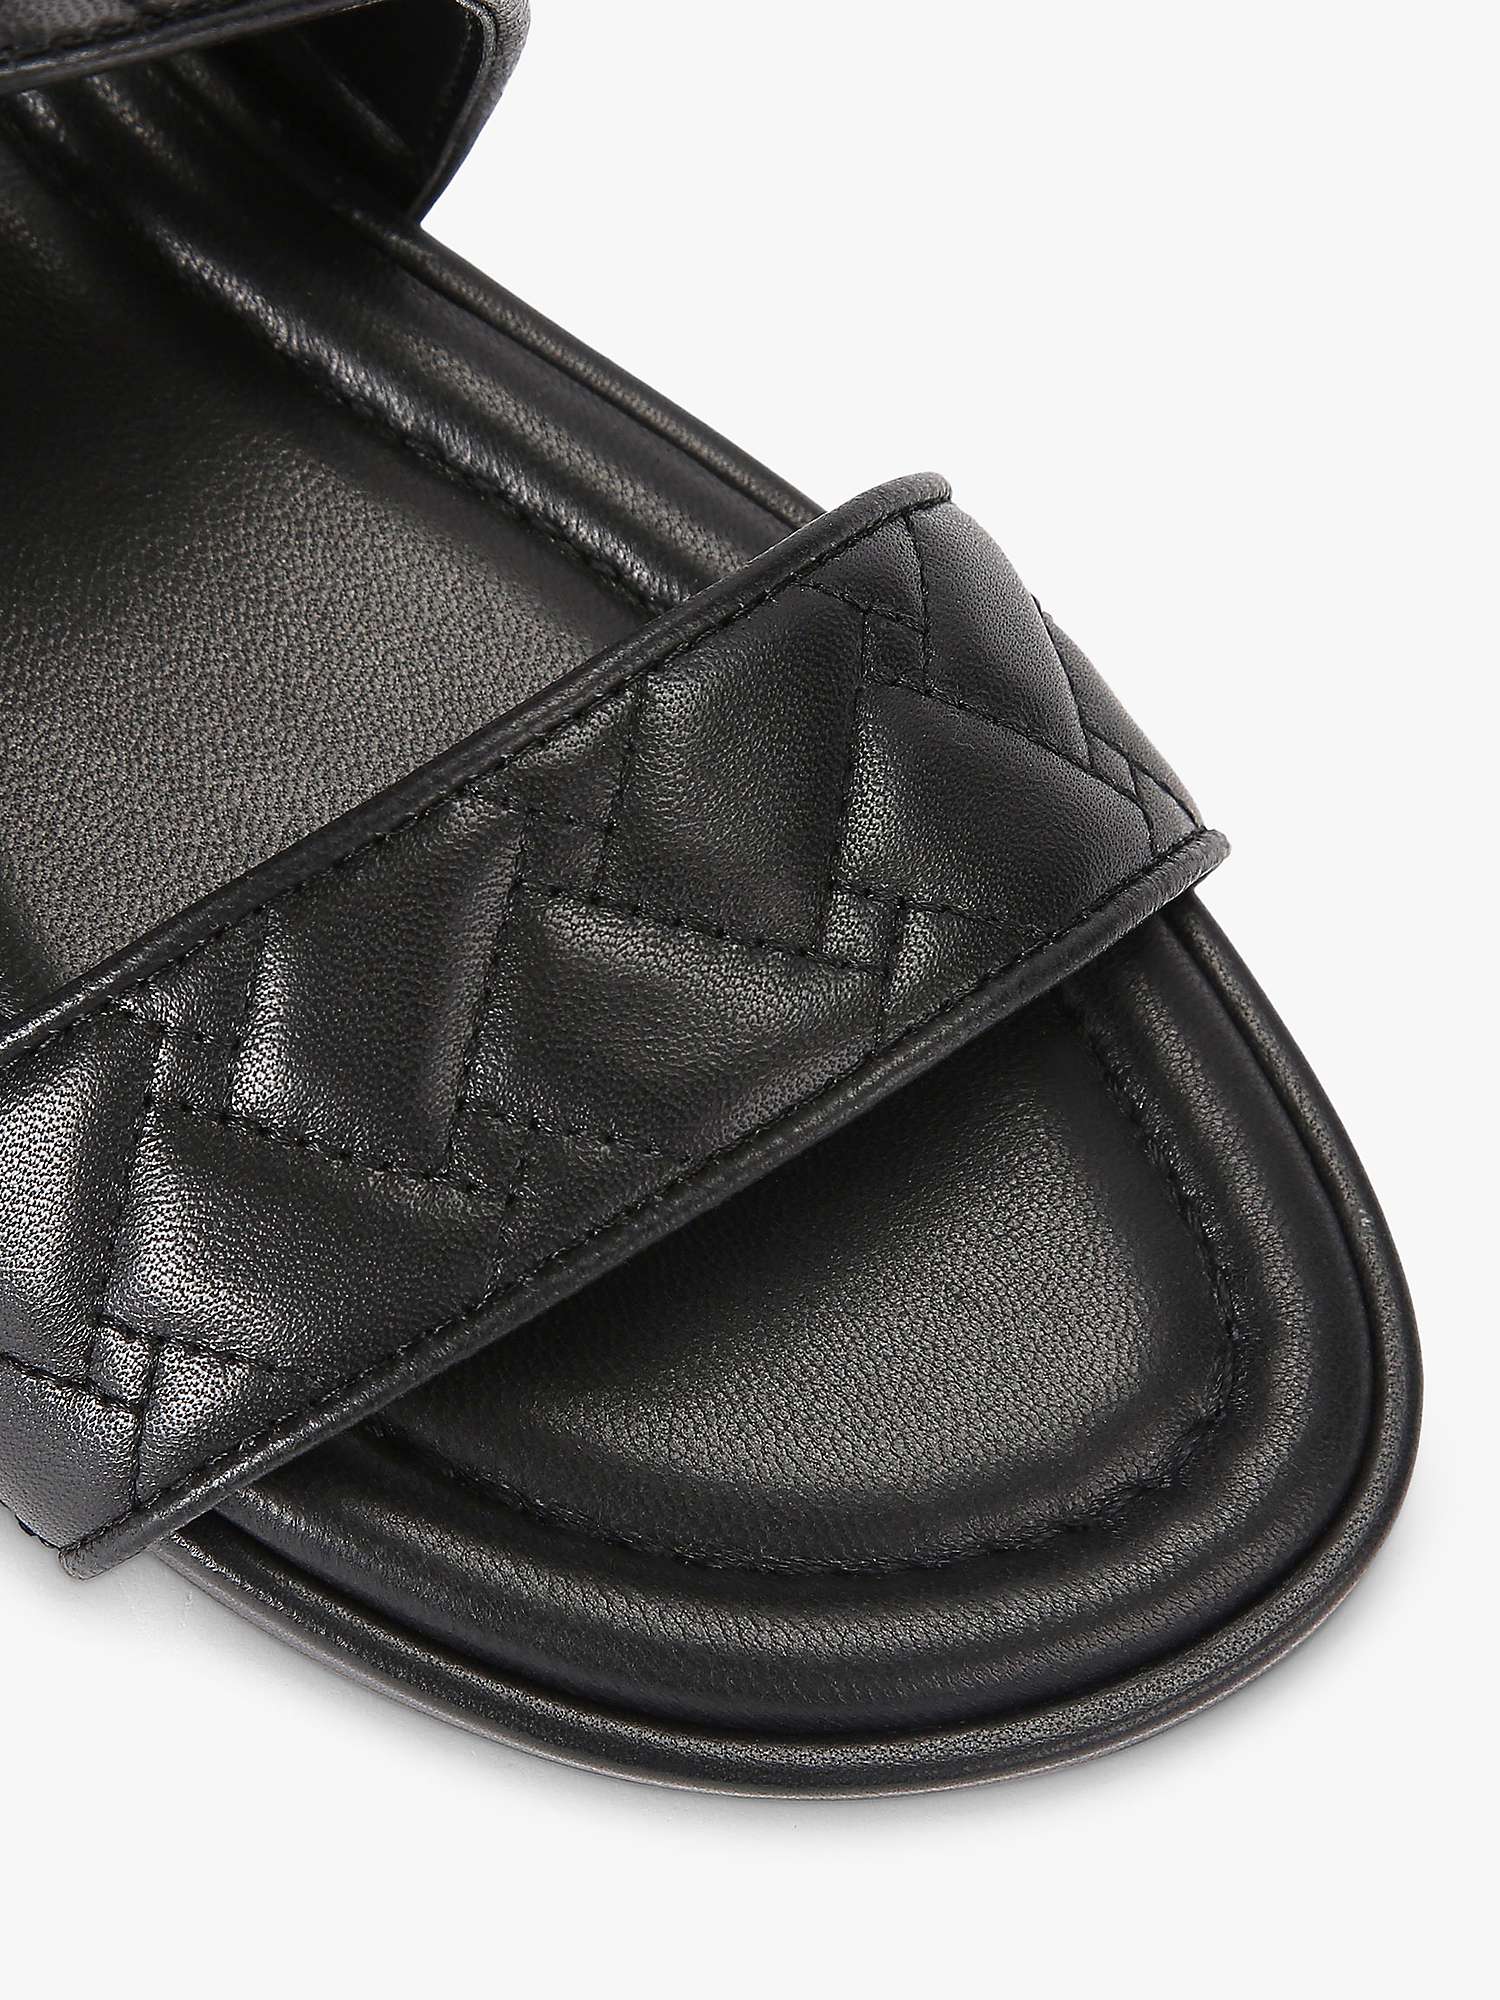 Buy Kurt Geiger London Mayfair Quilted Wrap Strap Sandals, Black Online at johnlewis.com